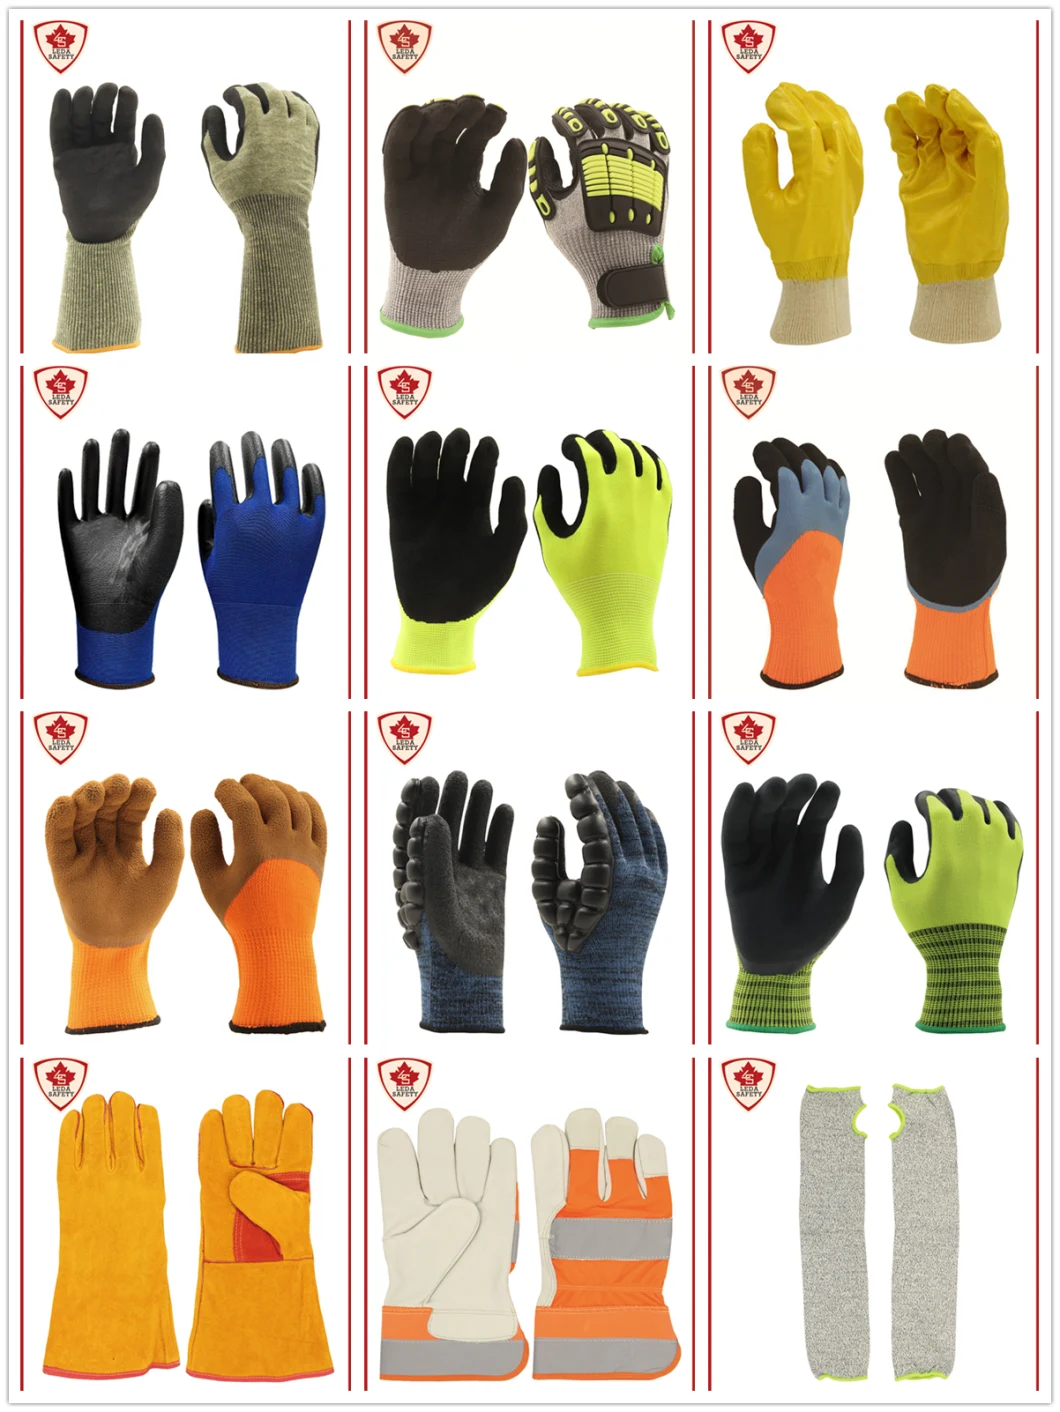 Grade a Cowhide Split Leather Gloves Welding Gloves